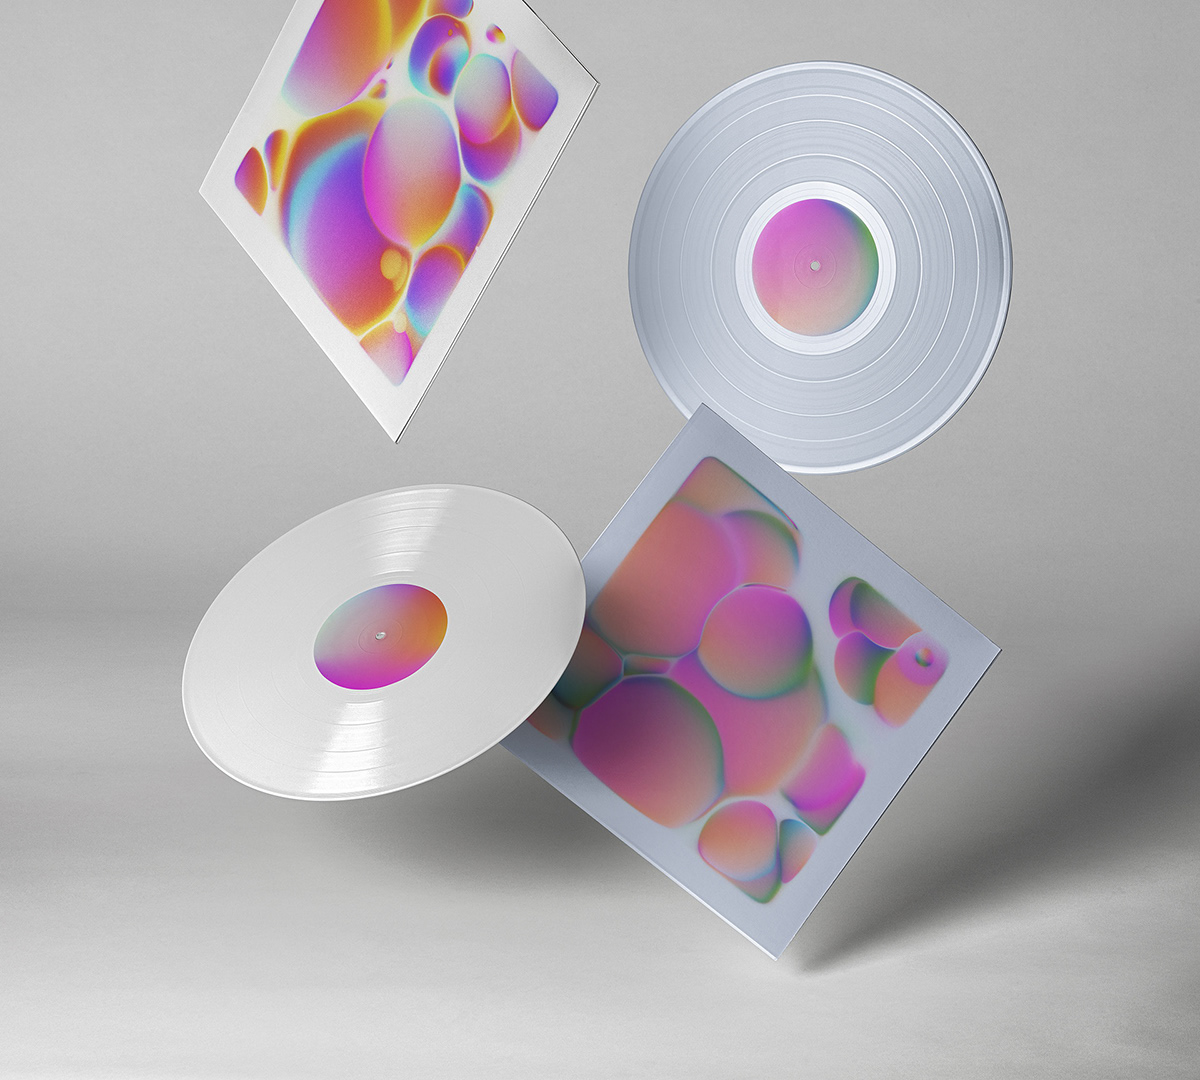 tension abstract artwork series bubbles vibrant gradient soft gradient colorful noise